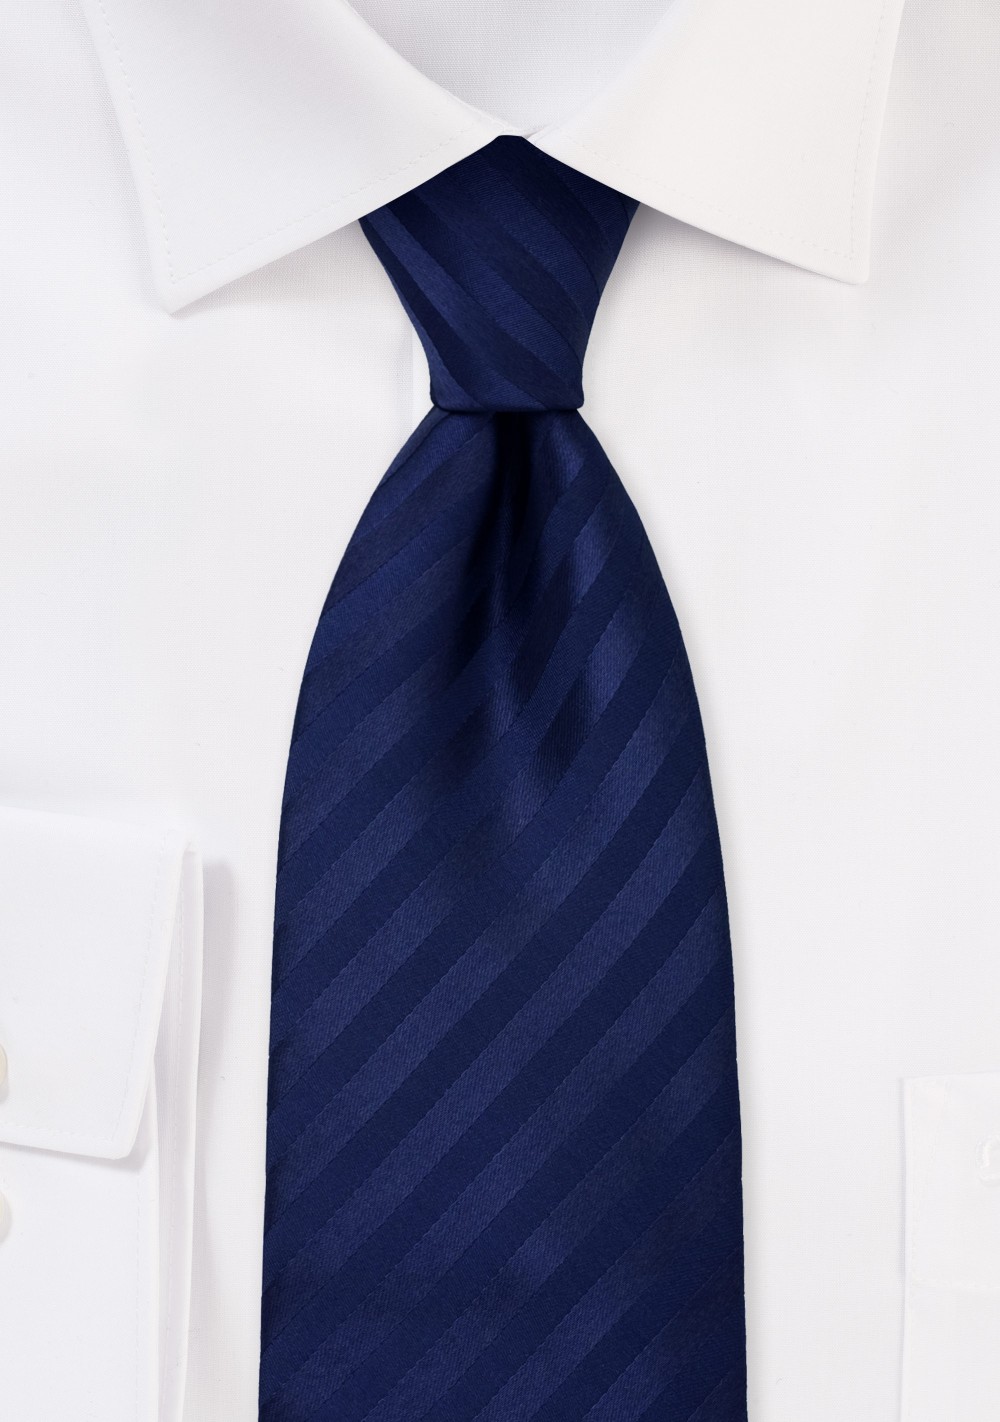 Solid Dark Blue Striped Tie in XL Length